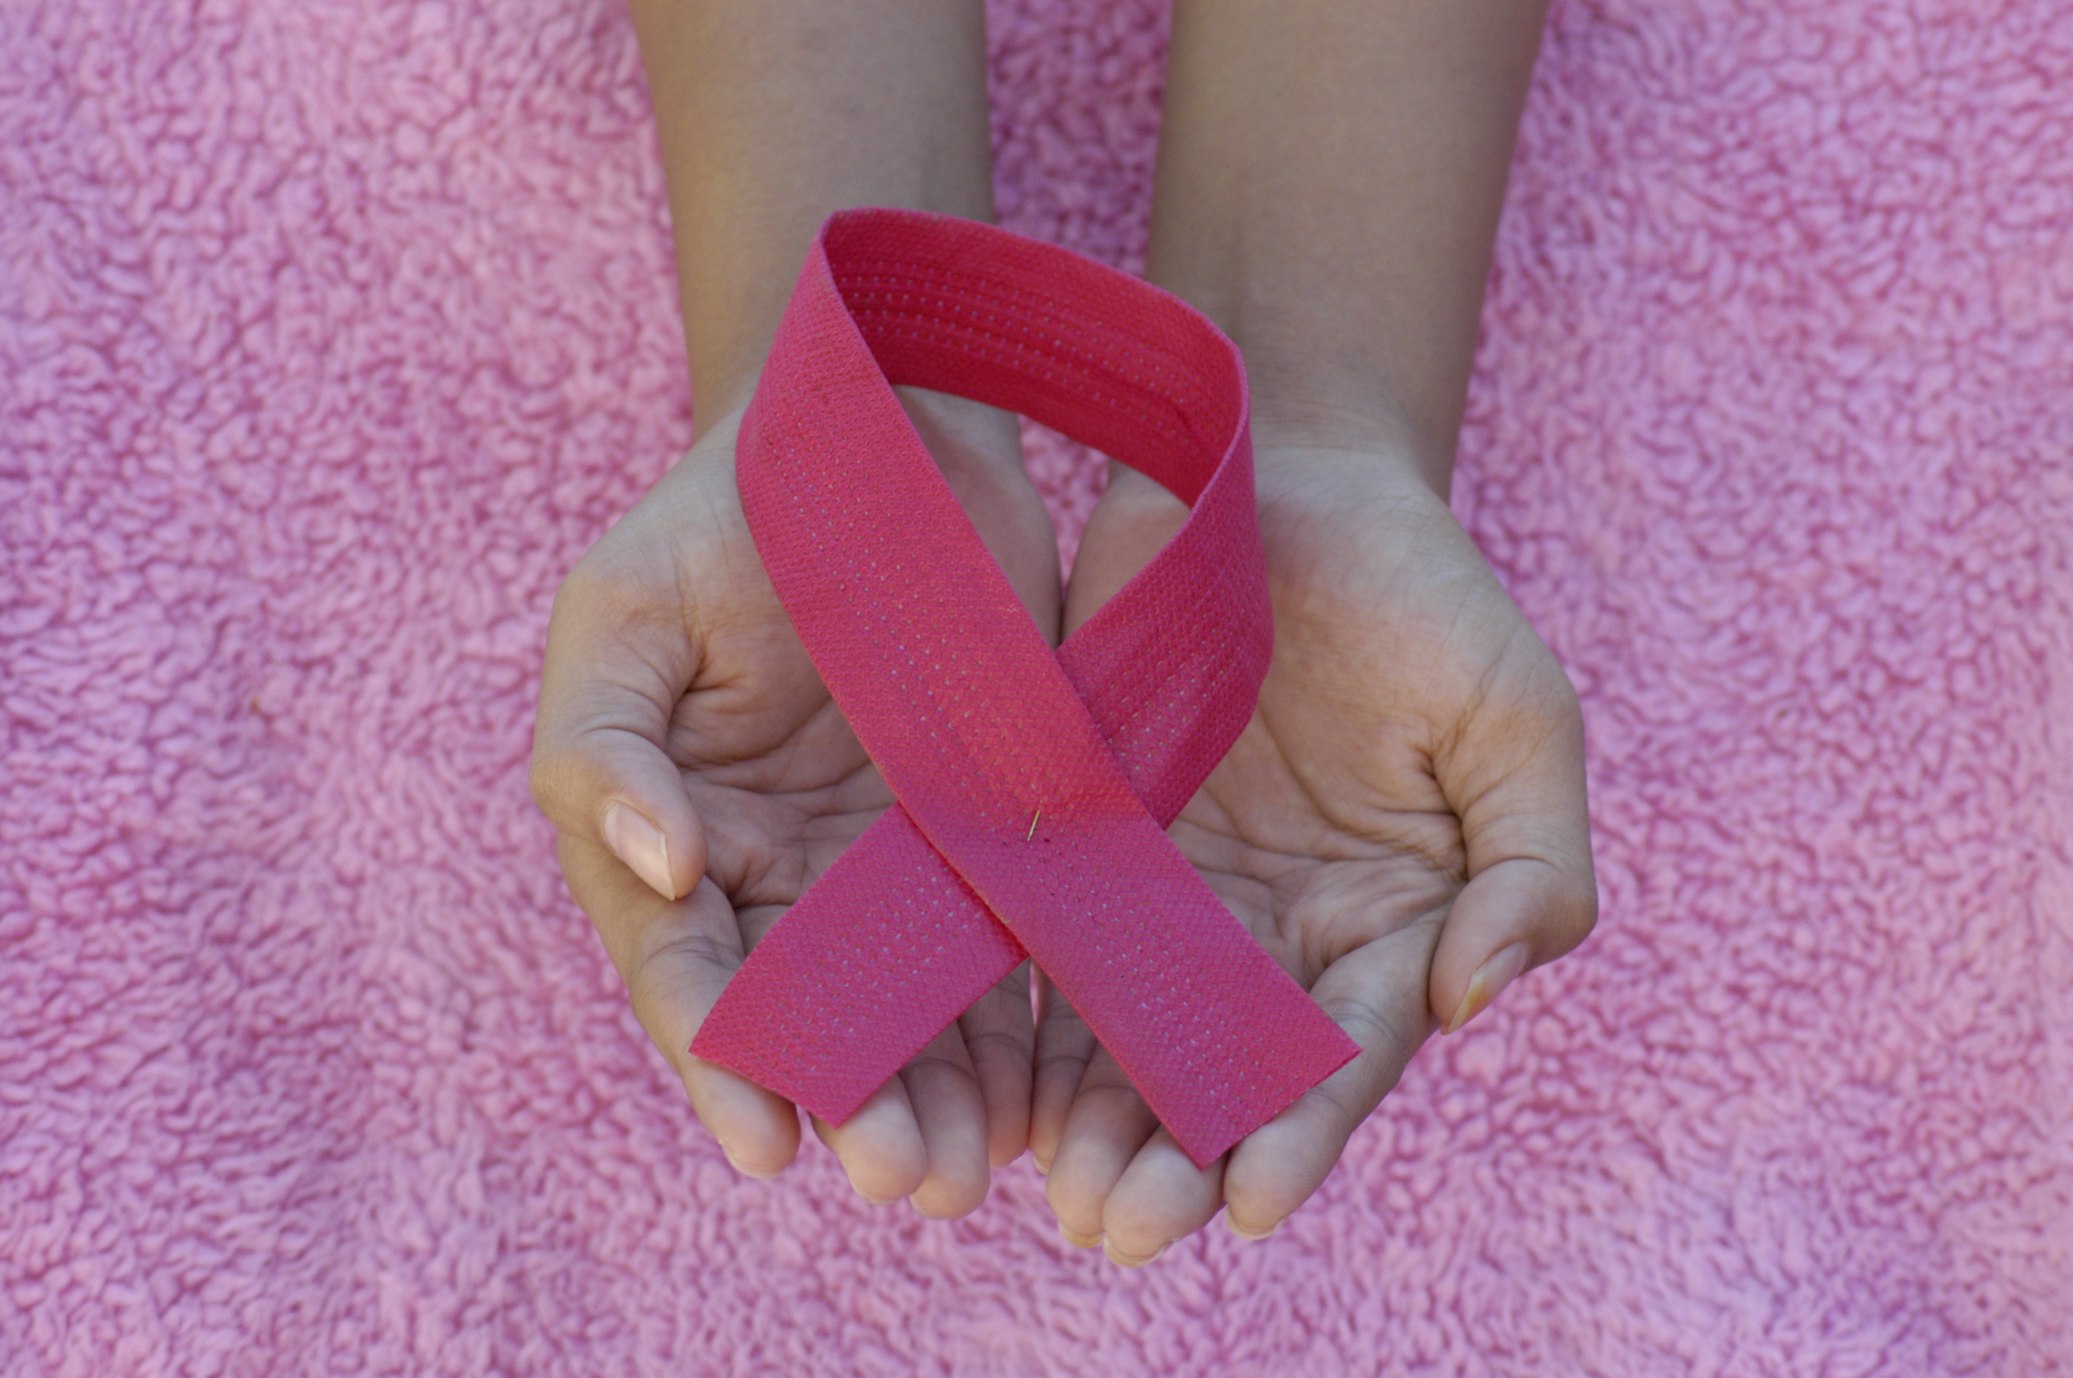 Pemkab Tangerang dan Siloam International Hospitak menggelar program screening kanker payudara